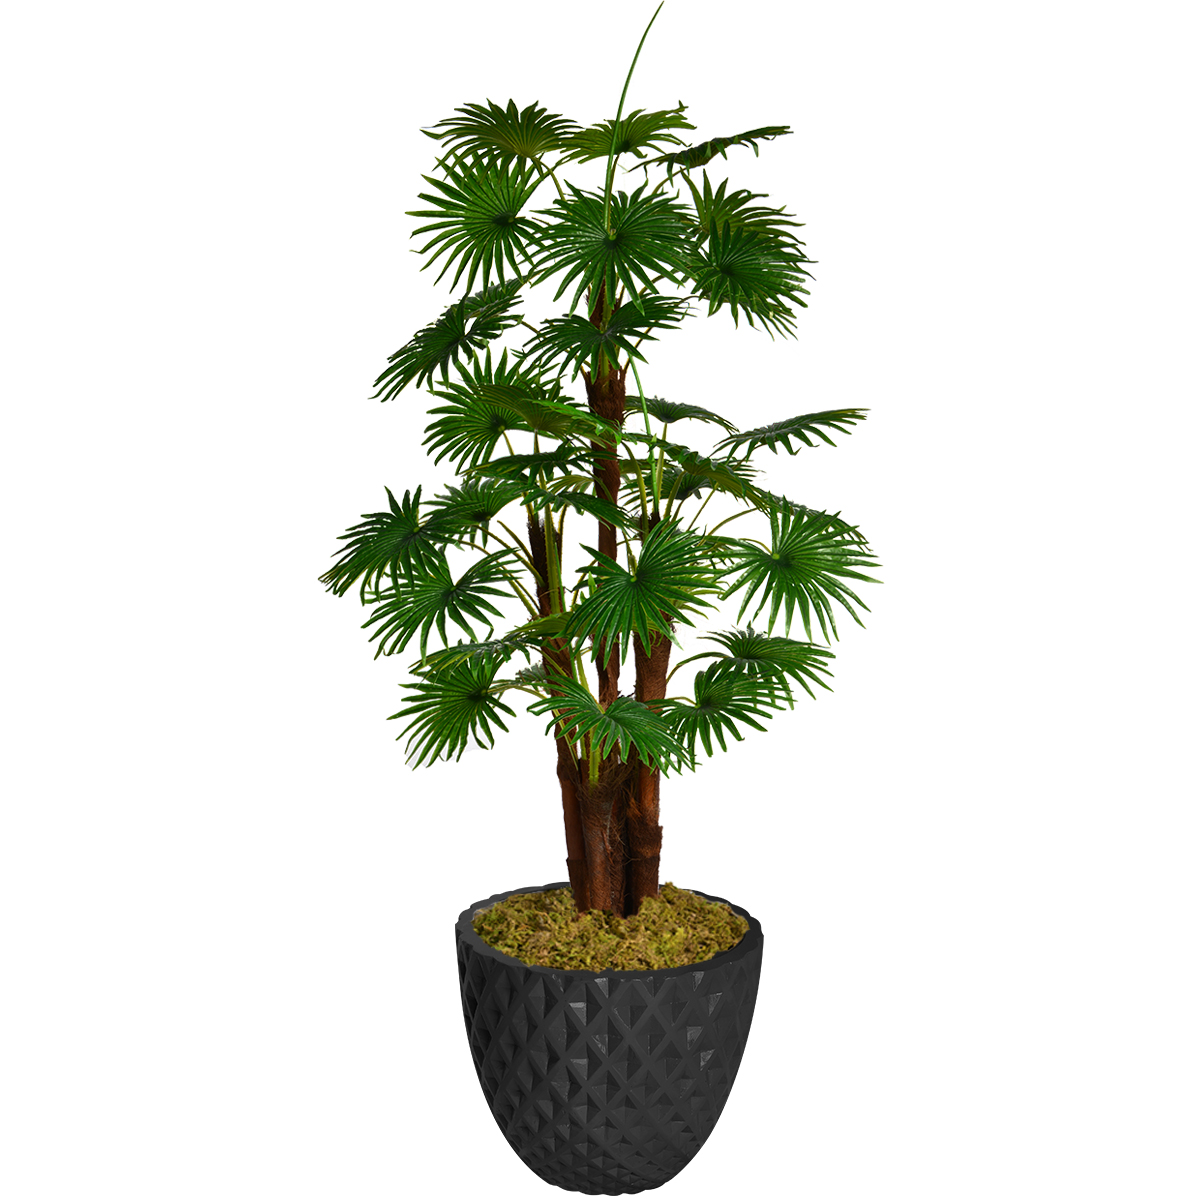 Vhx129205 71.6 In. Tall Fan Palm Tree, Burlap Kit & Fiberstone Planter